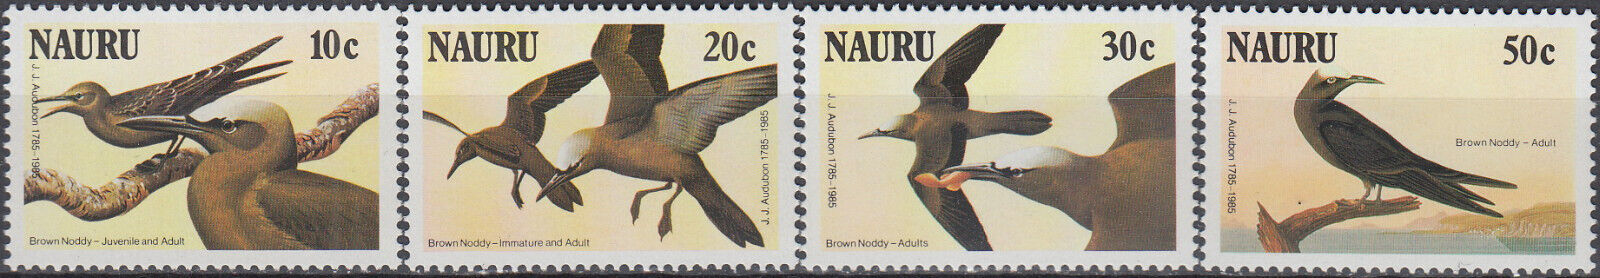 Nauru 200th Birthday John James Audubon Birds 1985 MNH-4,25 Euro